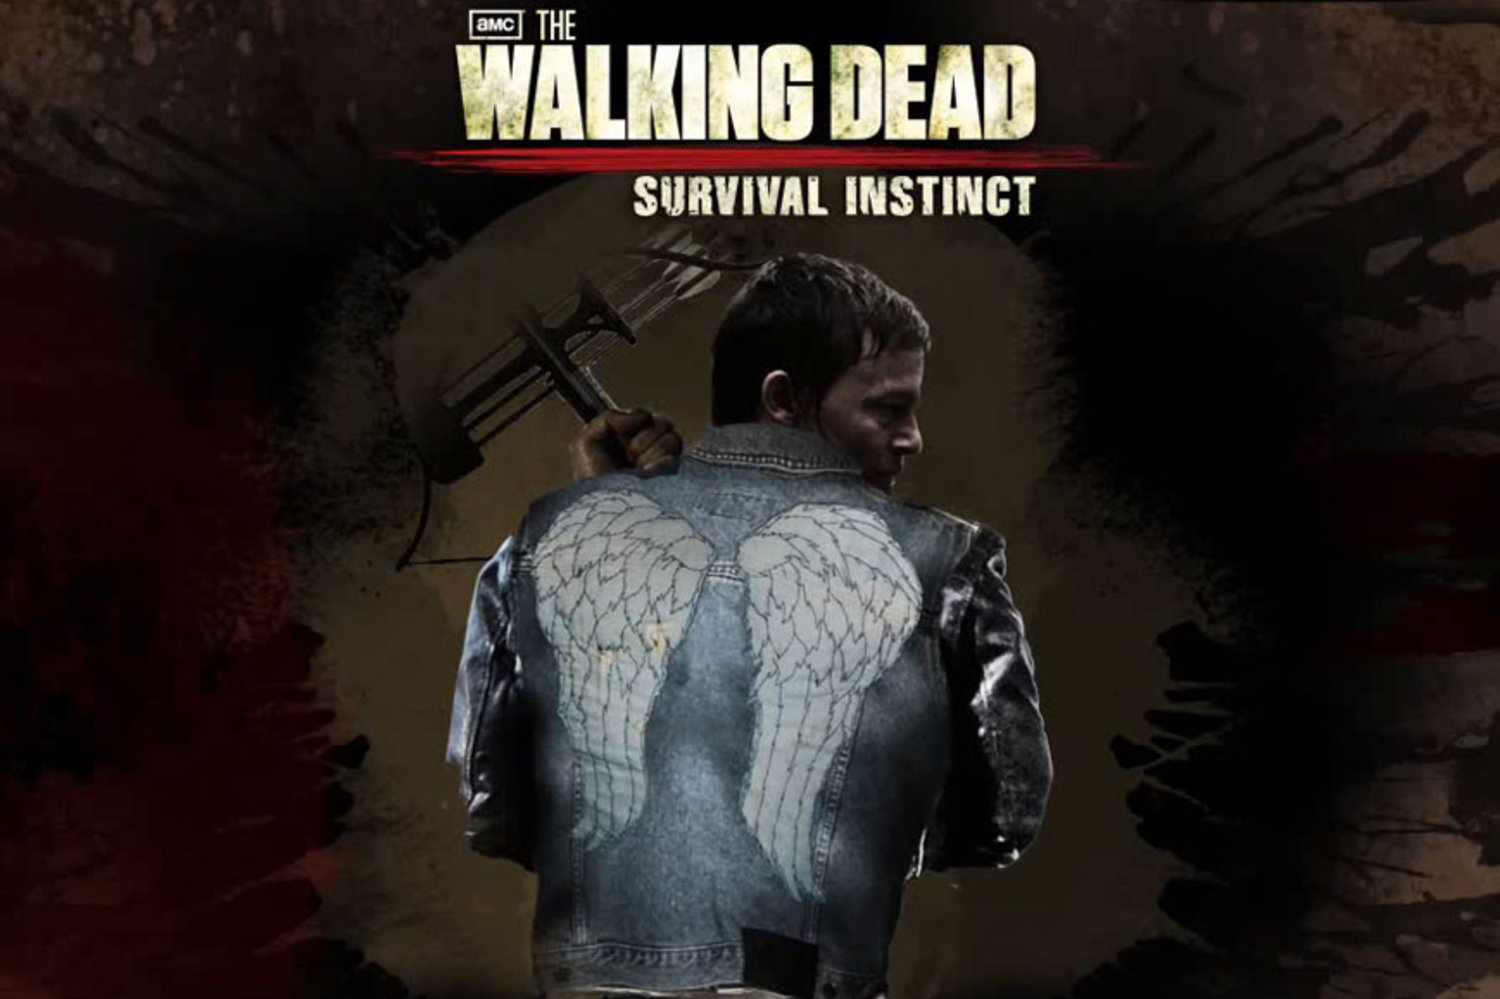 The Walking Dead: Survival Instinct Coming To Wii U - My Nintendo News